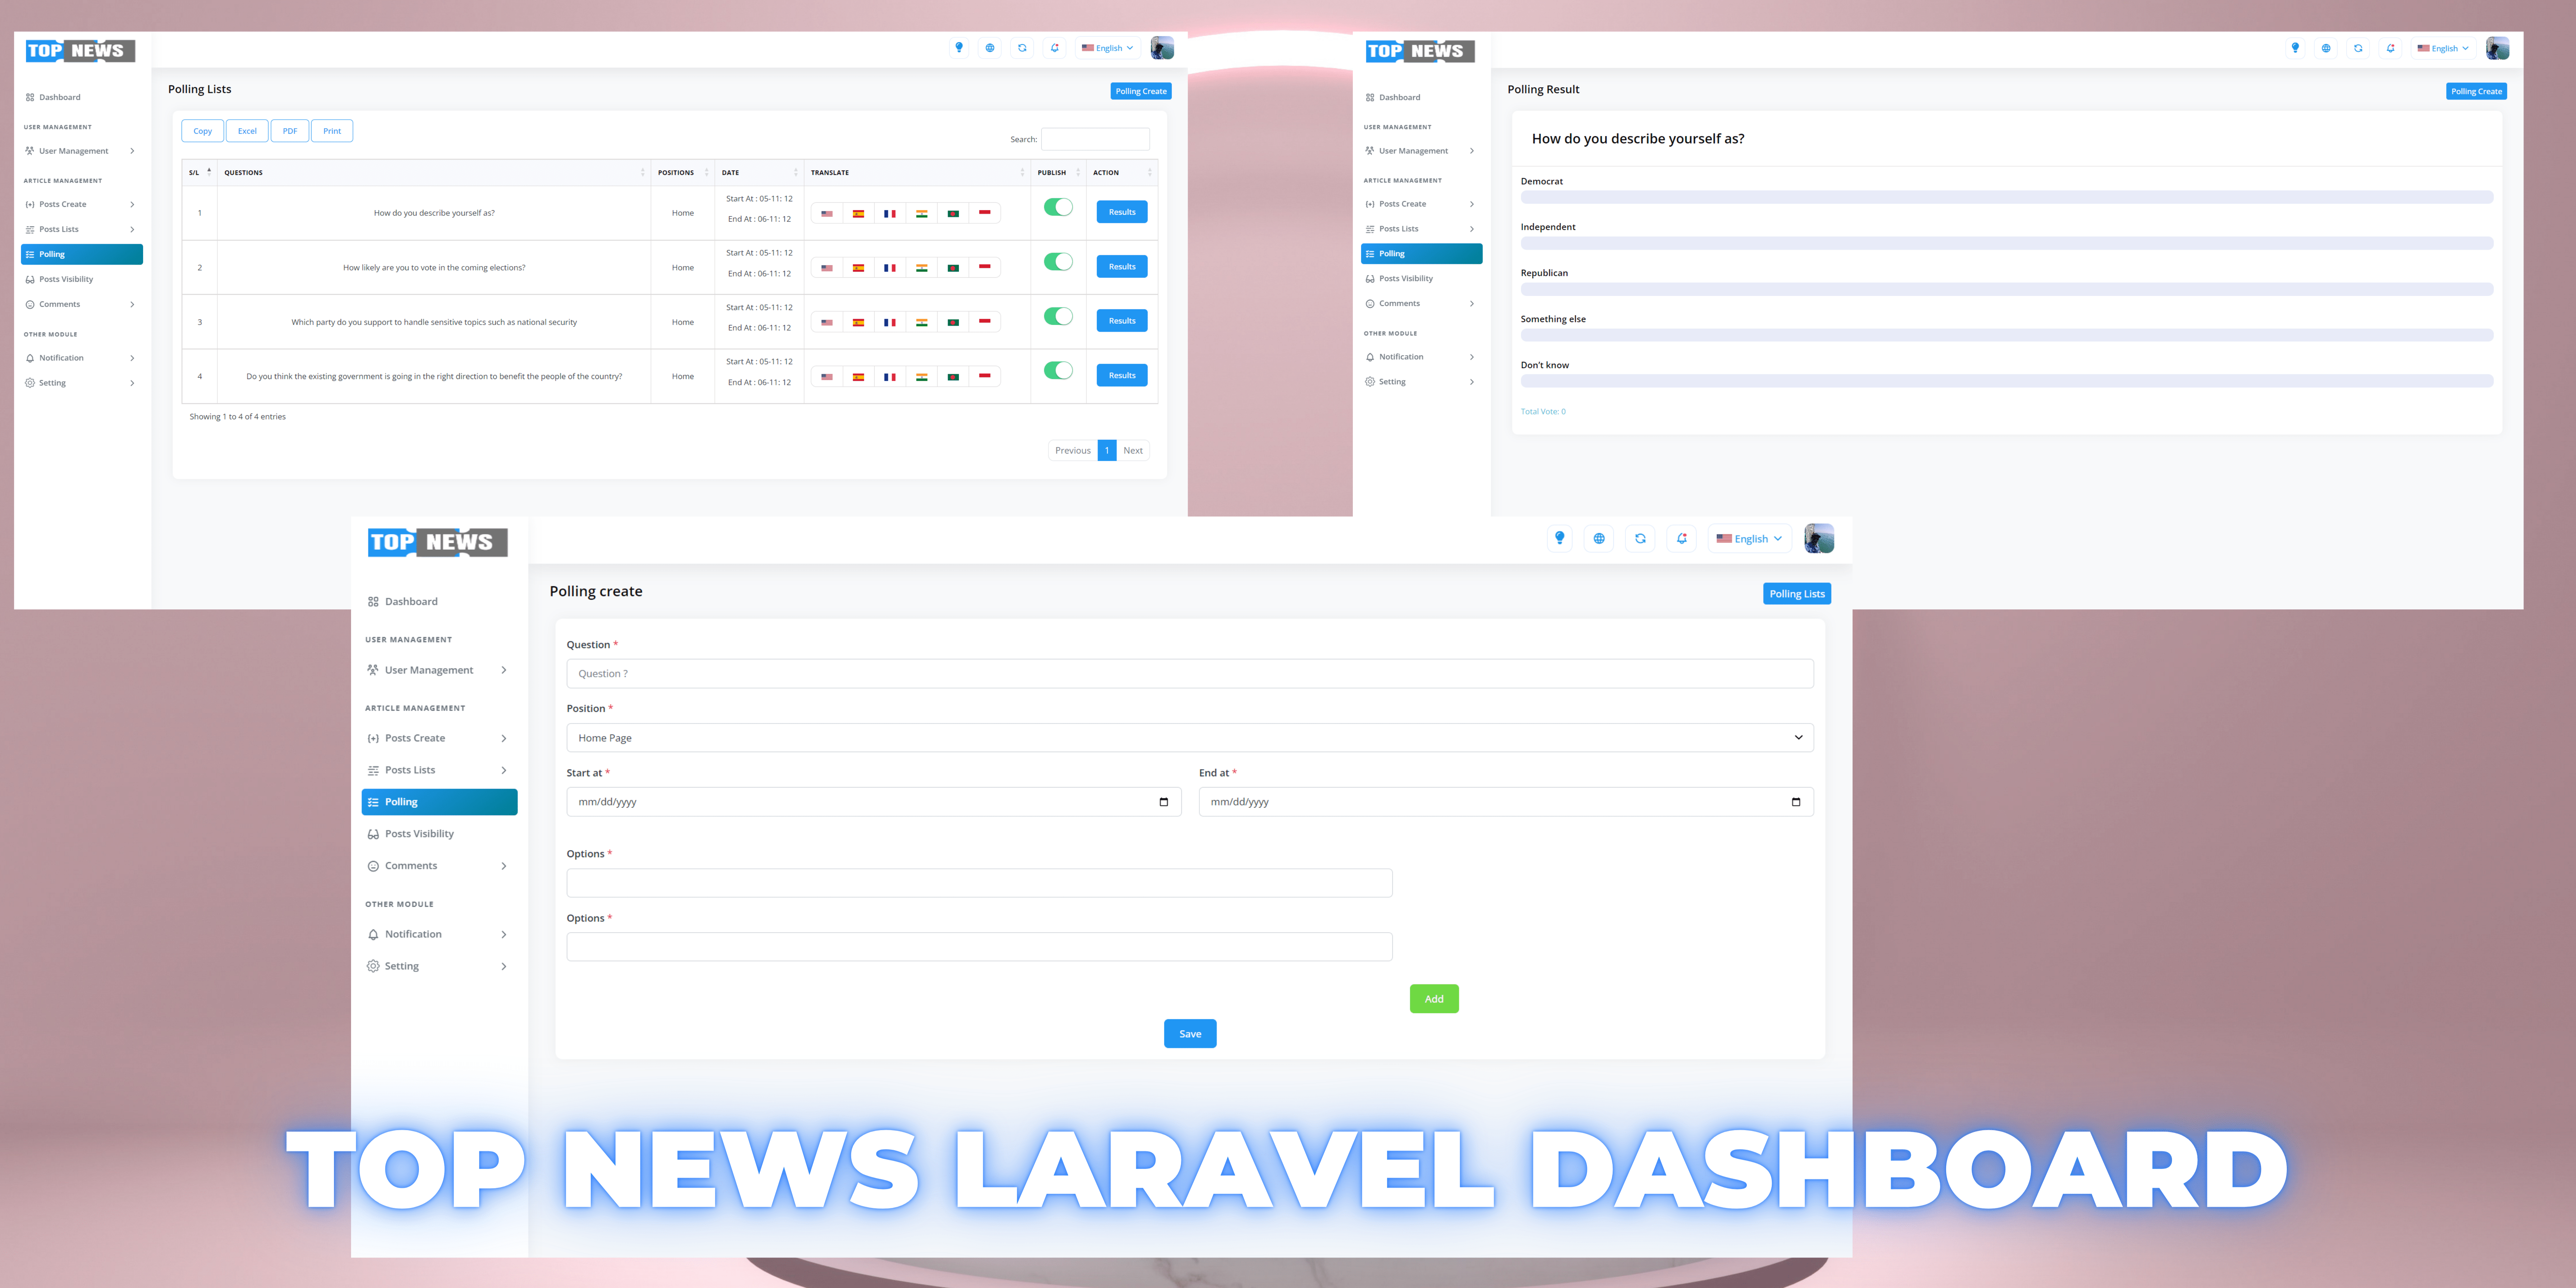 Top News Laravel Dashboard and Flutter Apps - 3